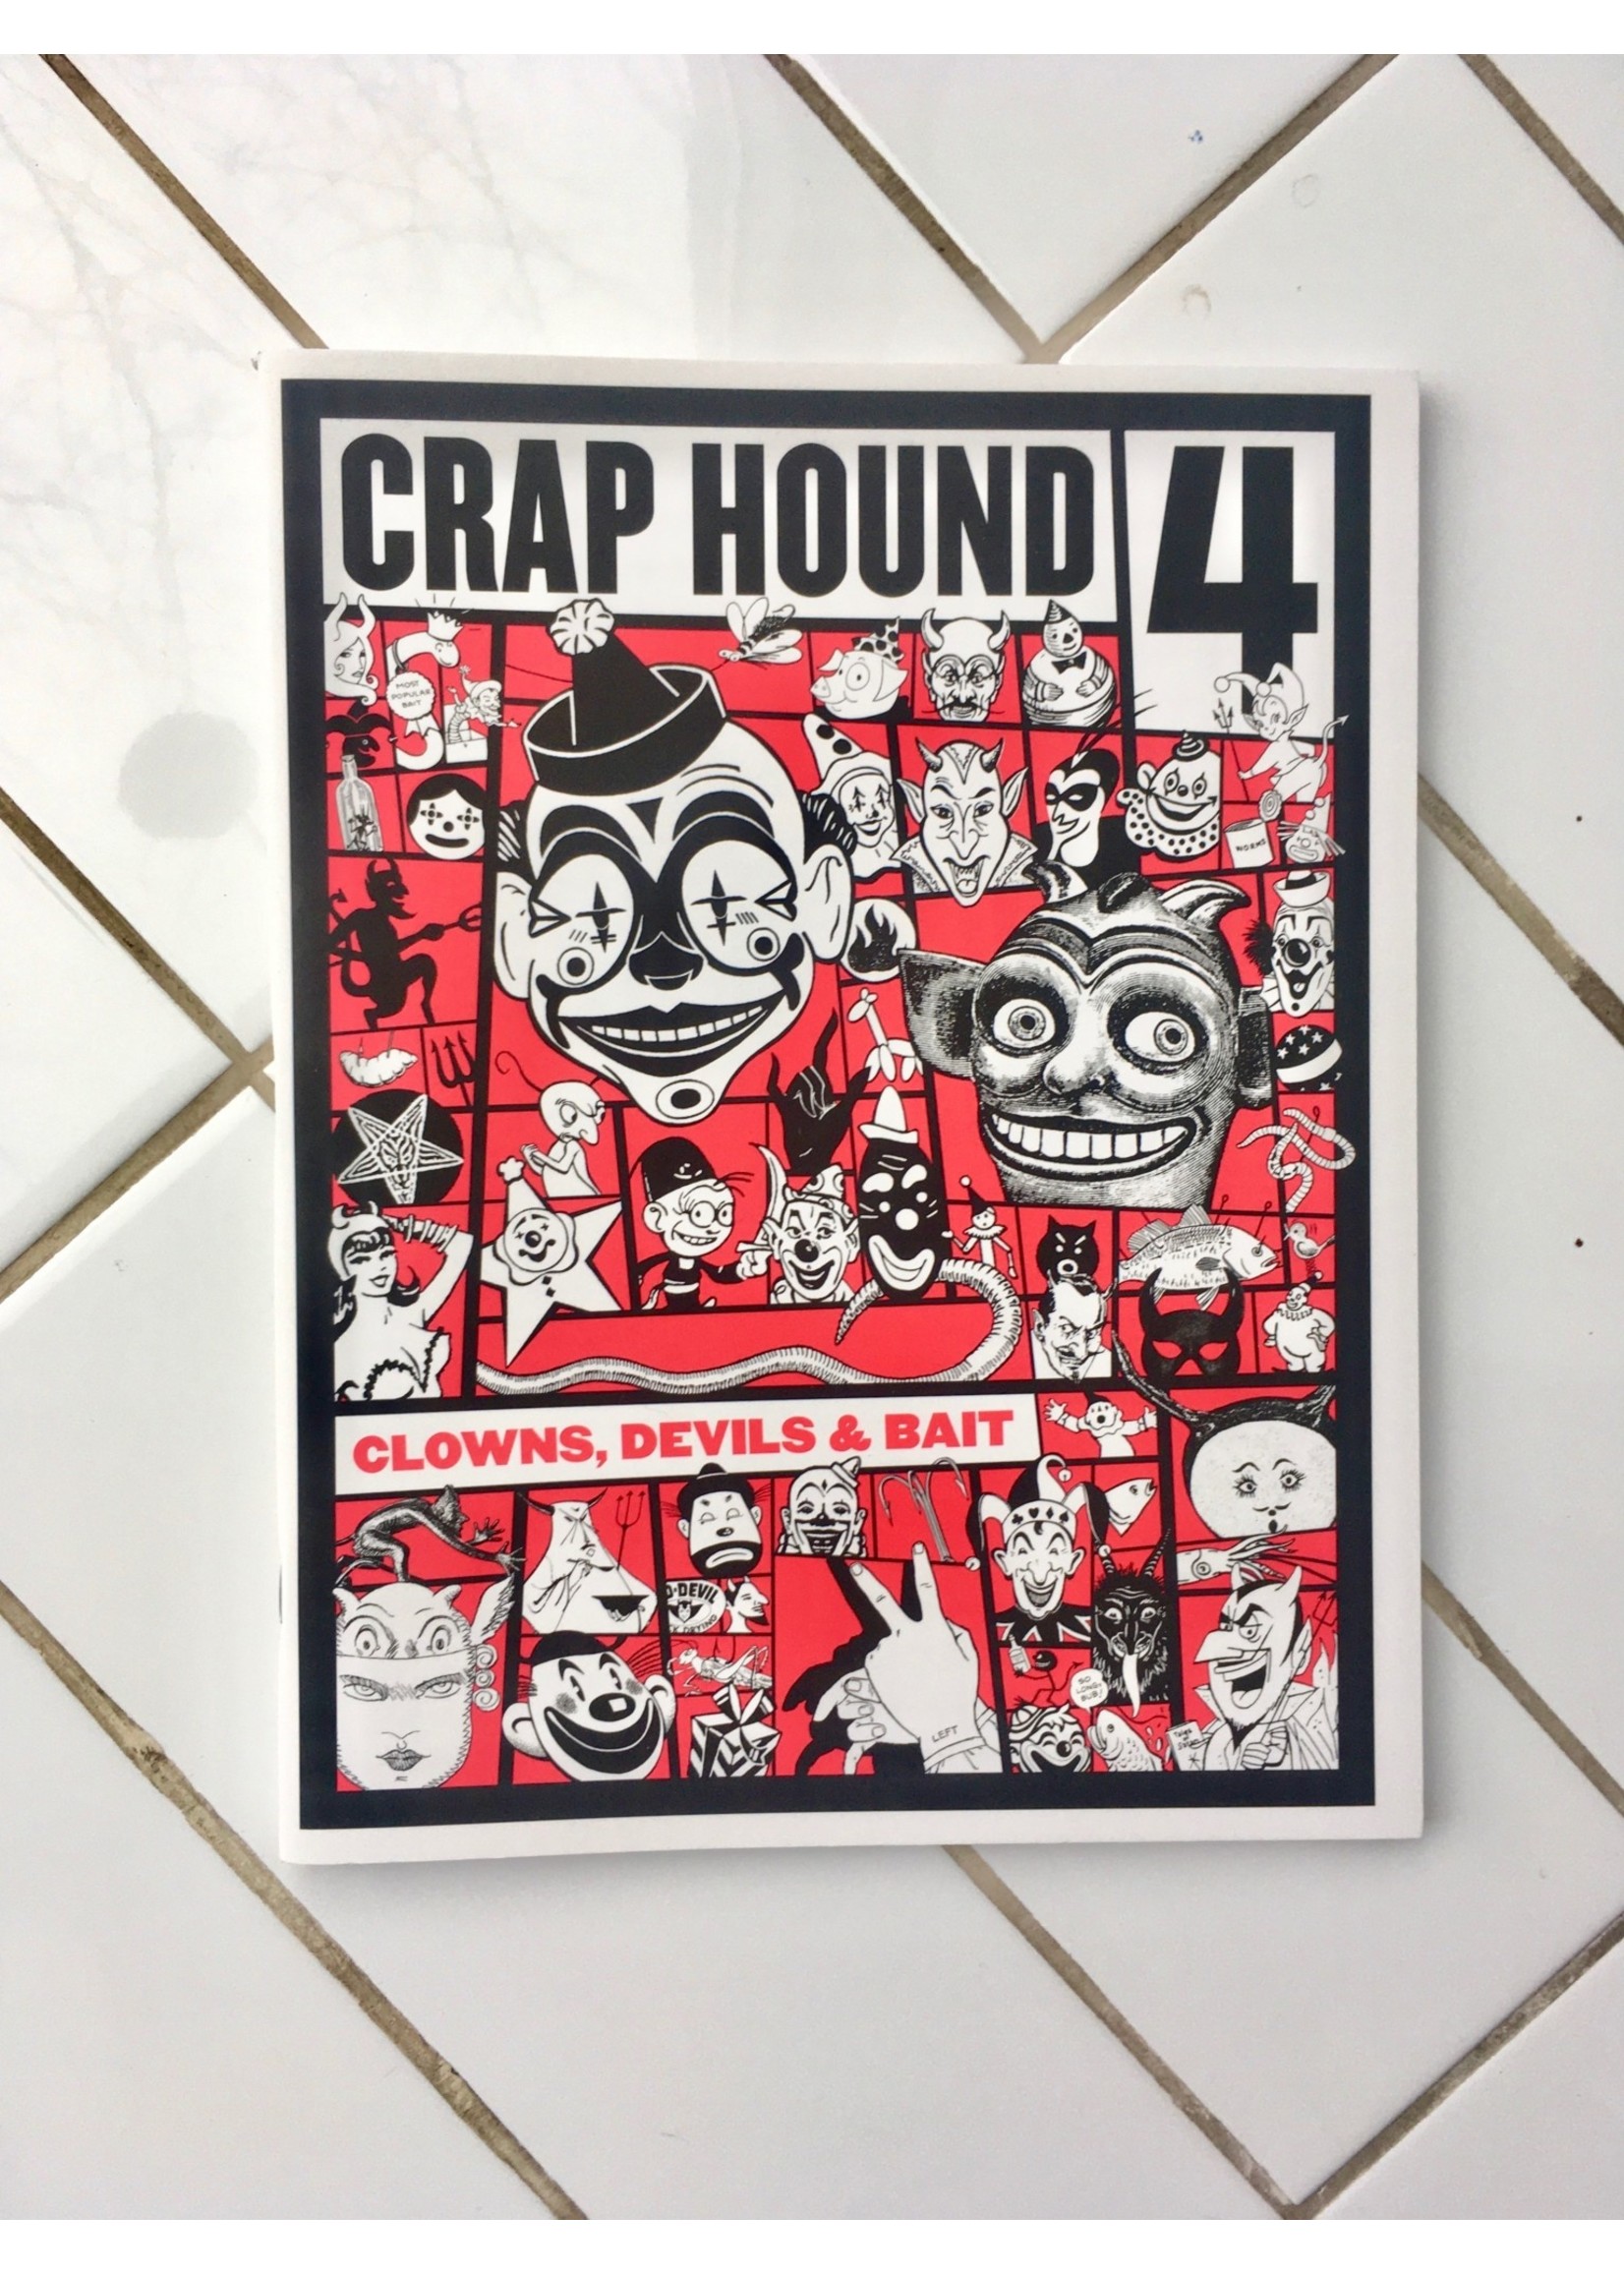 Sean Tejaratchi "Crap Hound" Magazine by Sean Tejaratchi